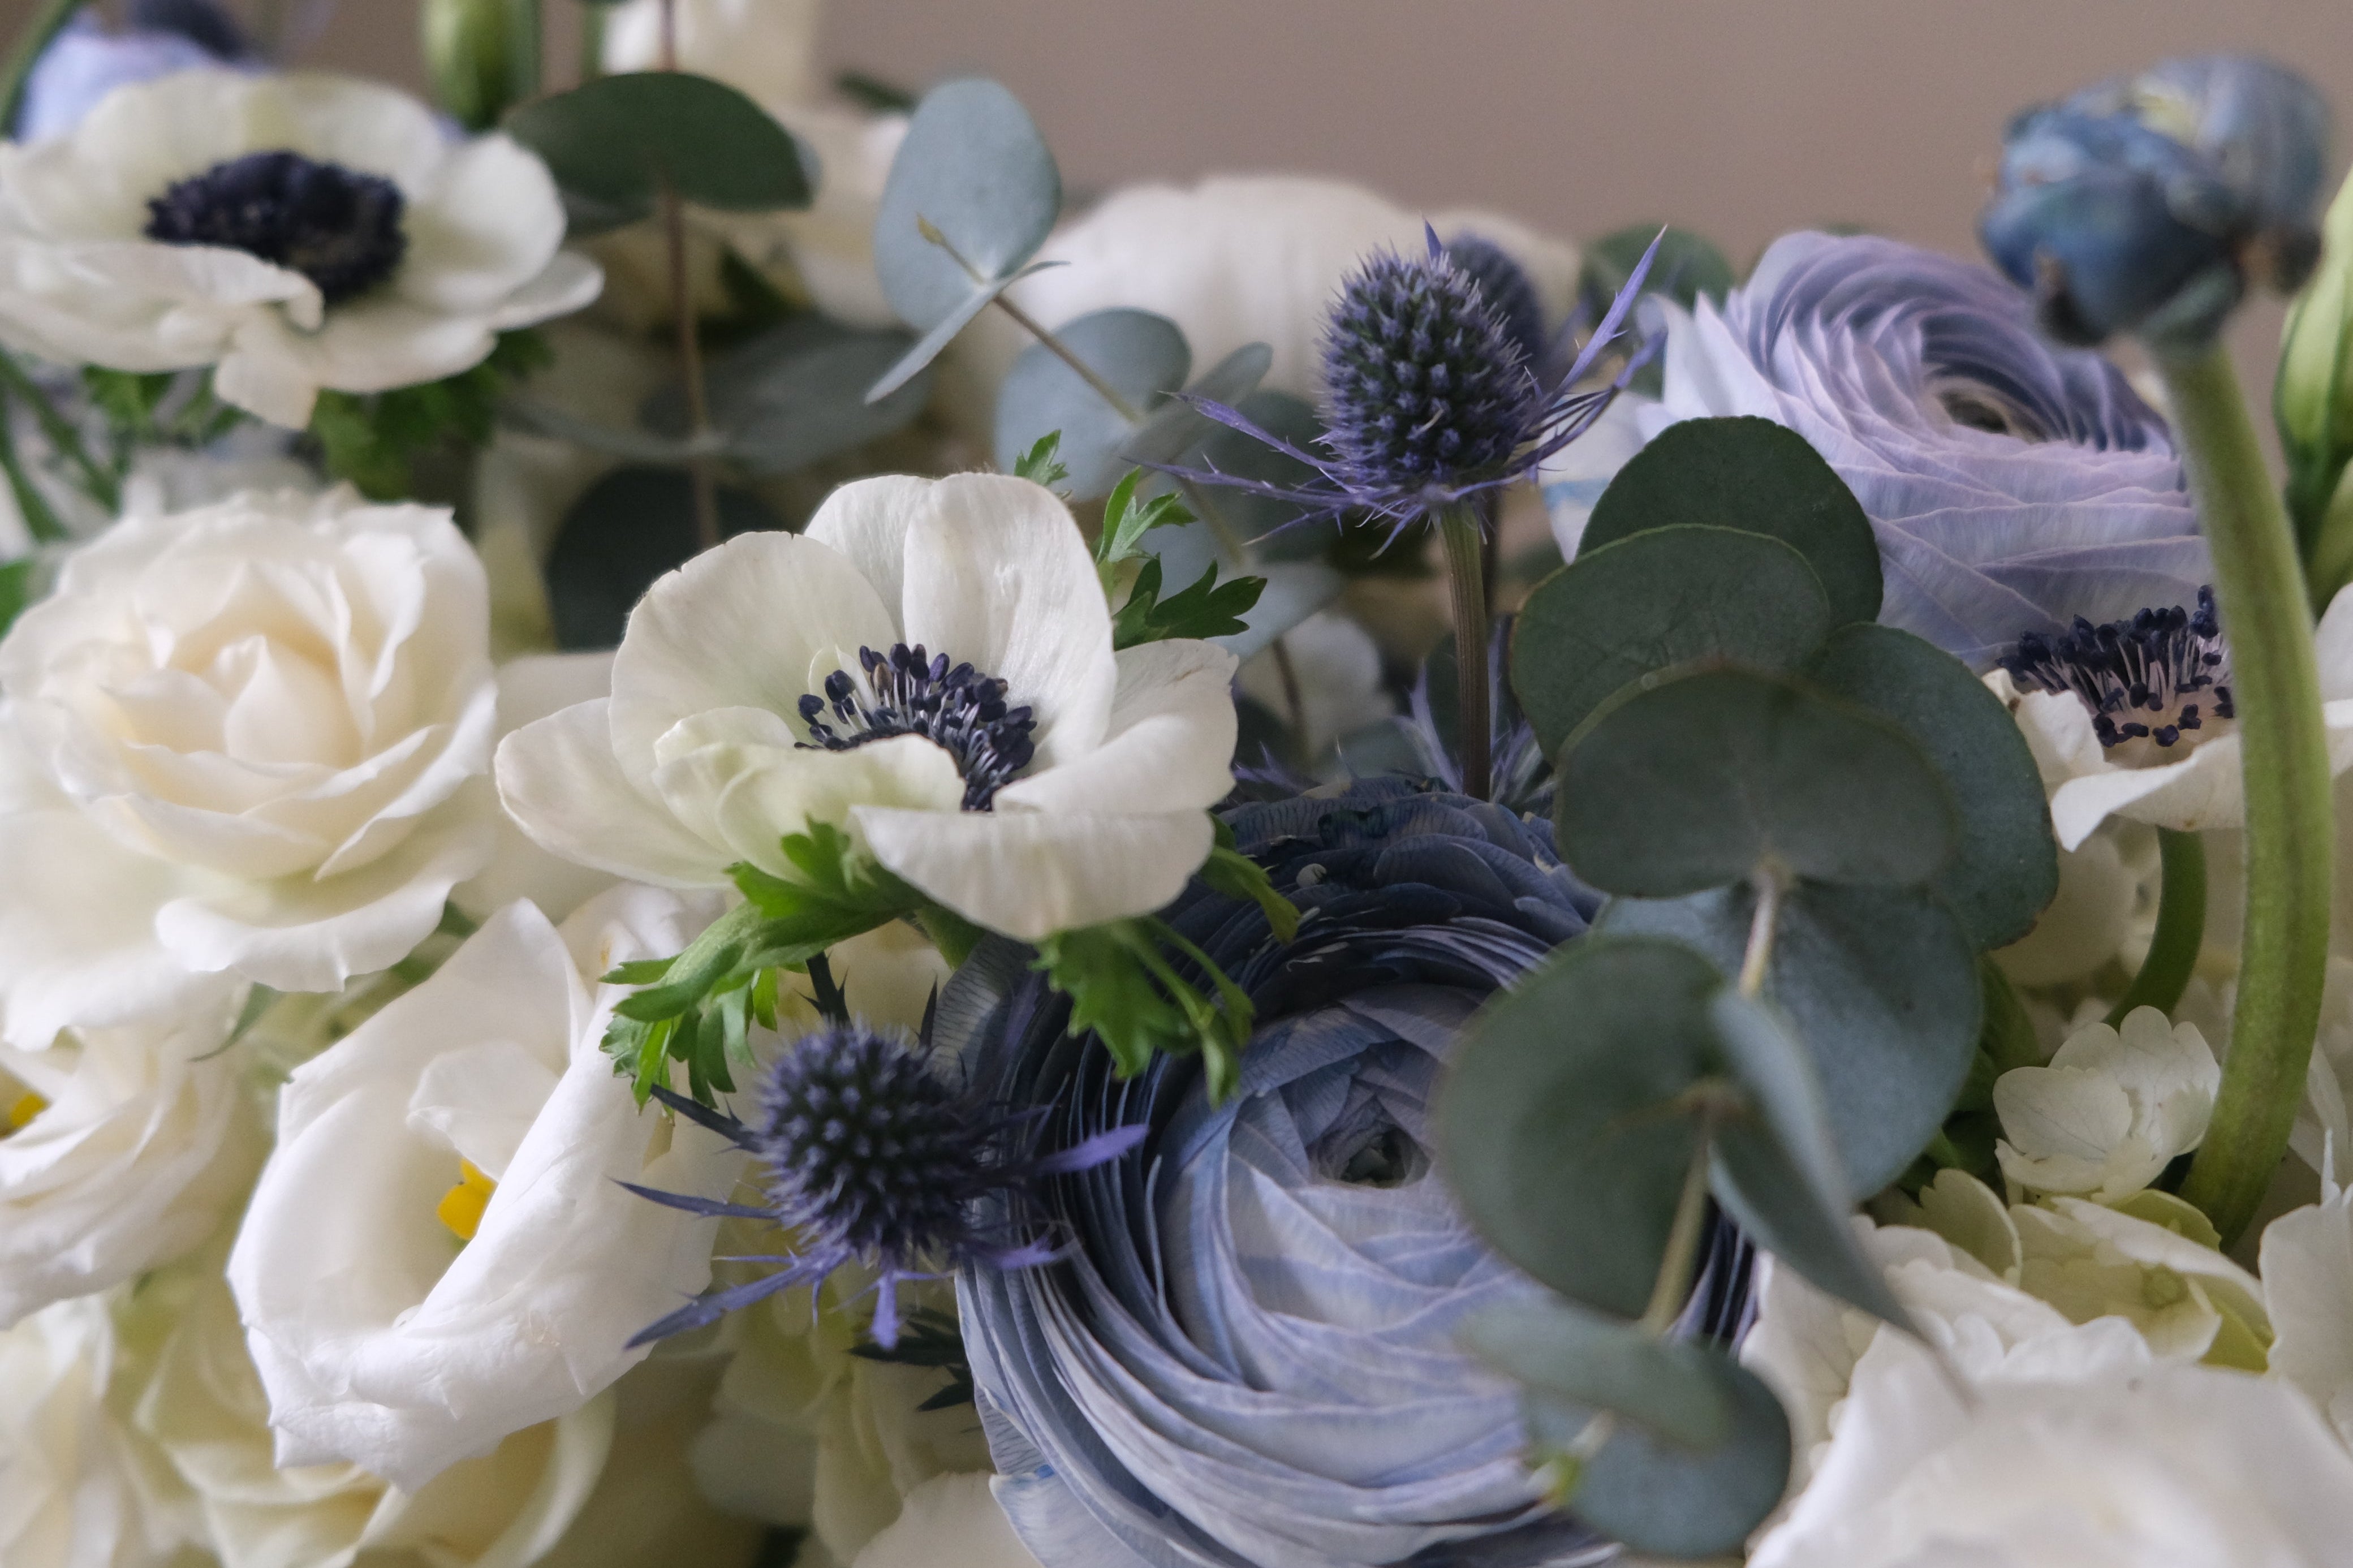 Feeling Blue Centrepiece - Immanuel Florist